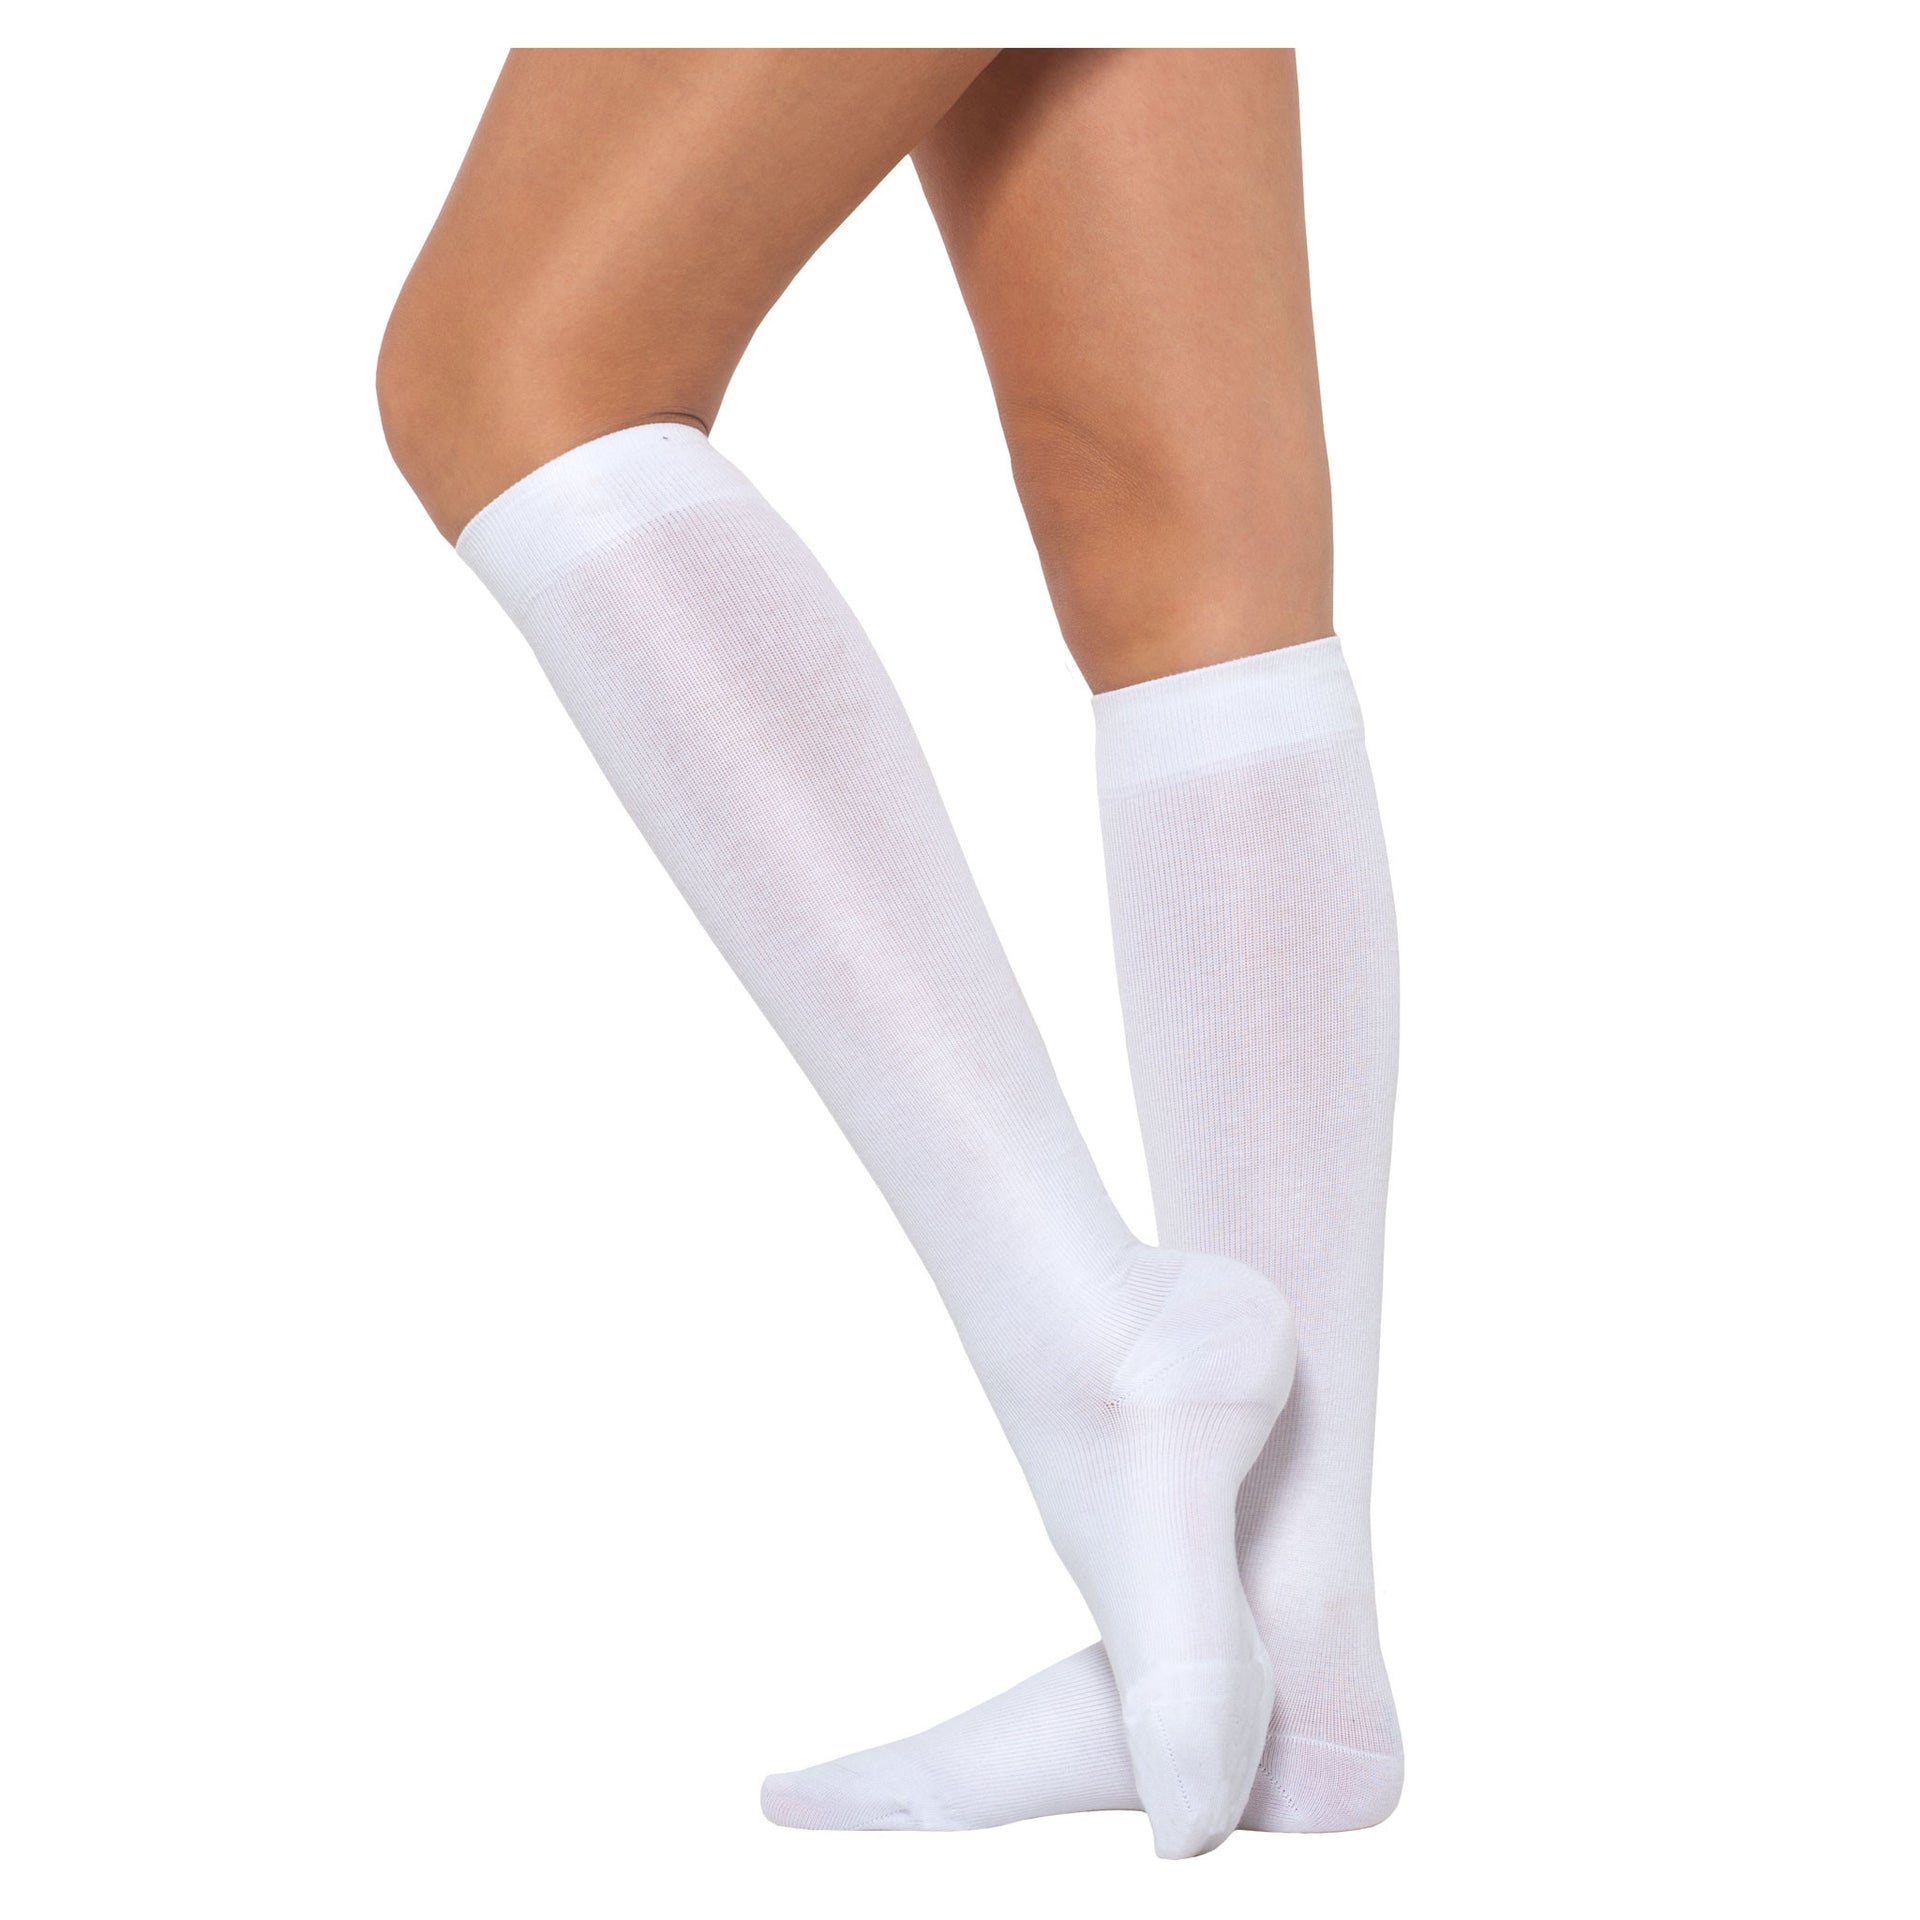 Healthweir Graduated Compression Cotton Socks for Men Women 15-20 mmHg